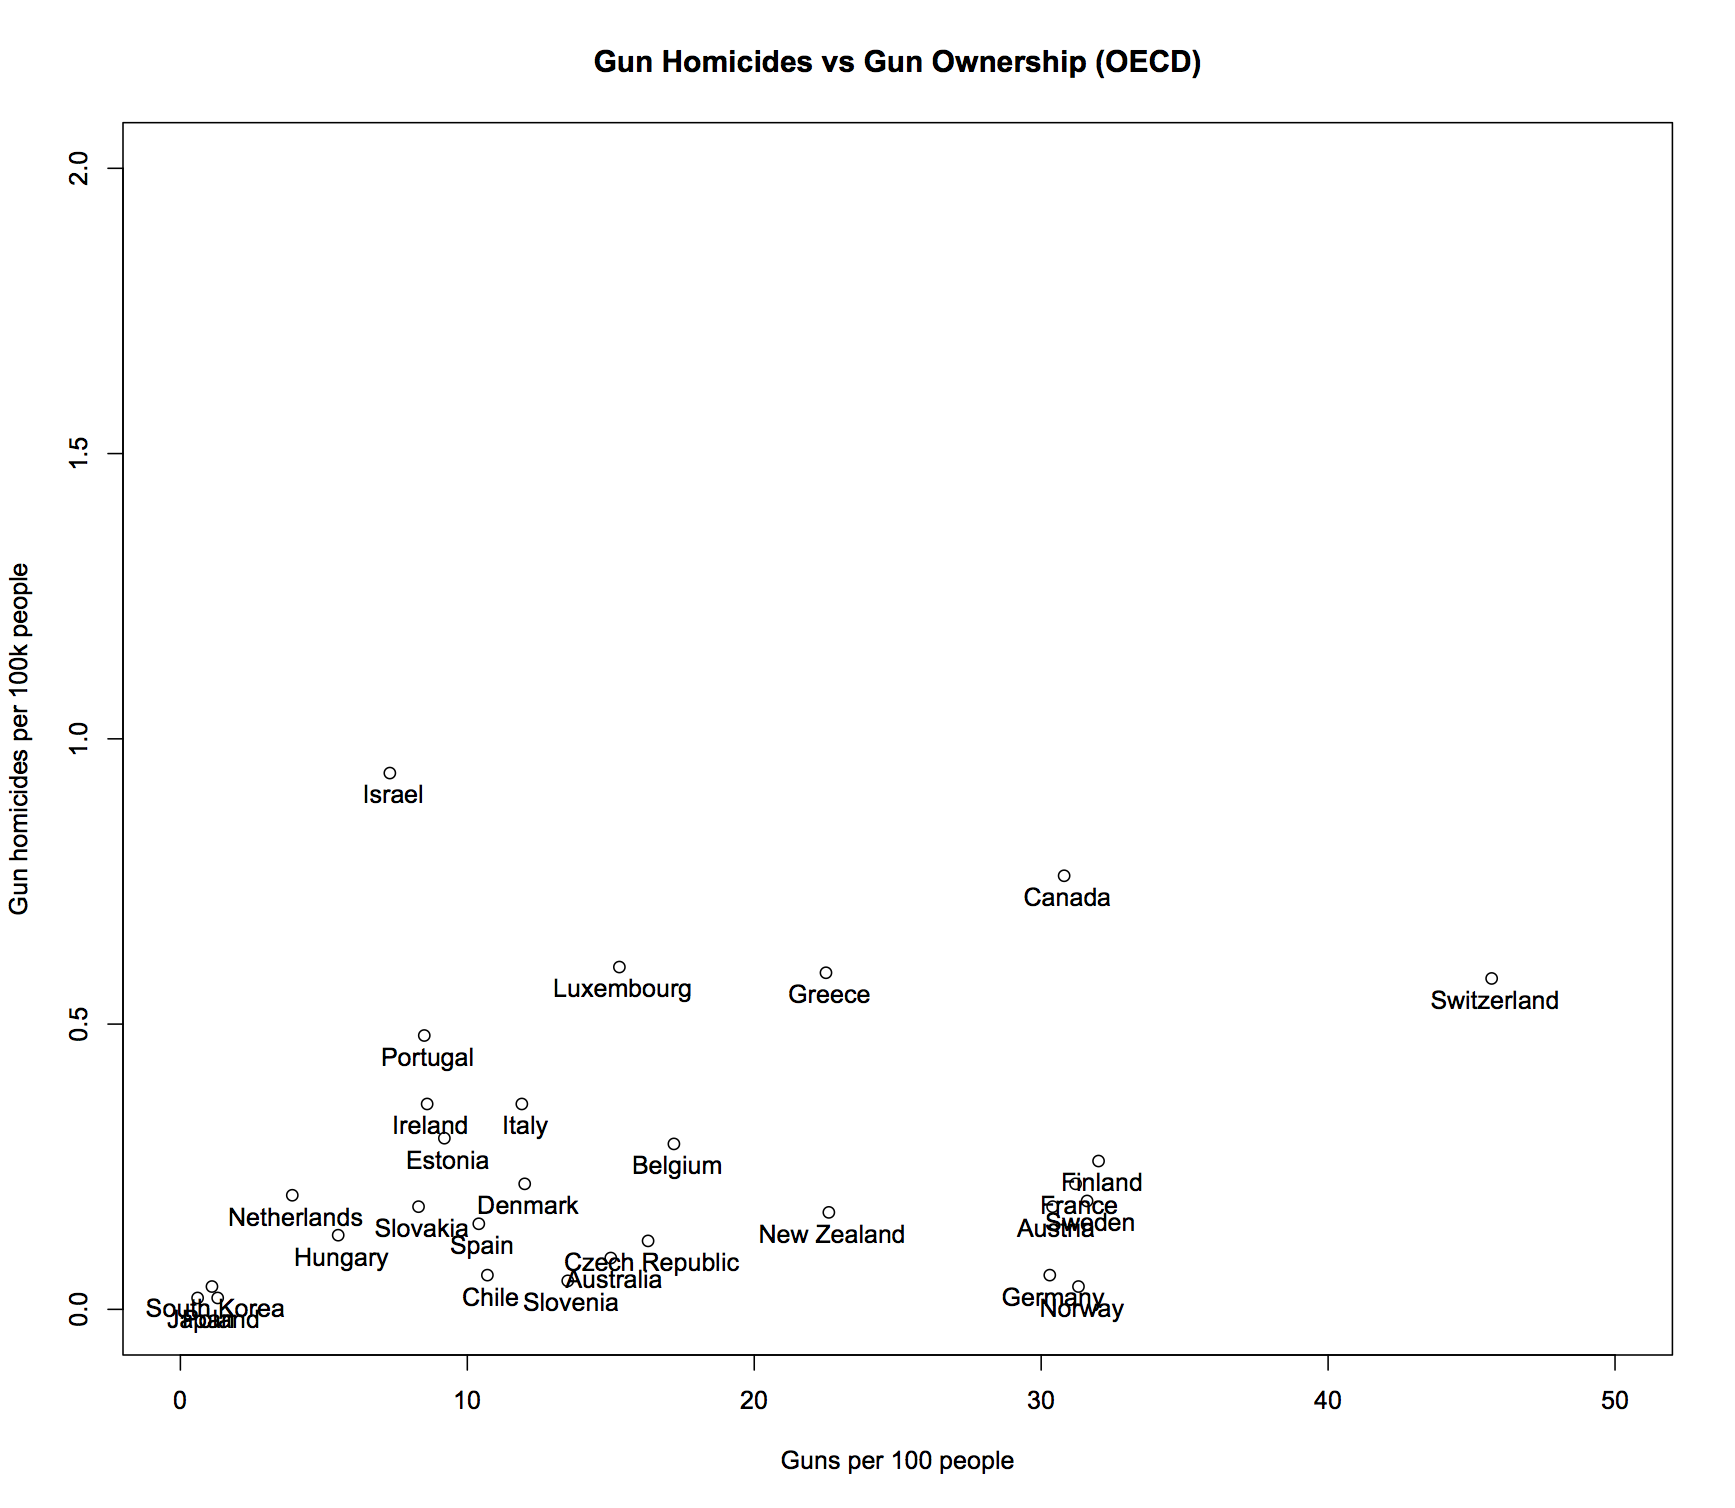 Gun homicides vs. Gun Ownership for OECD countries (Detail)